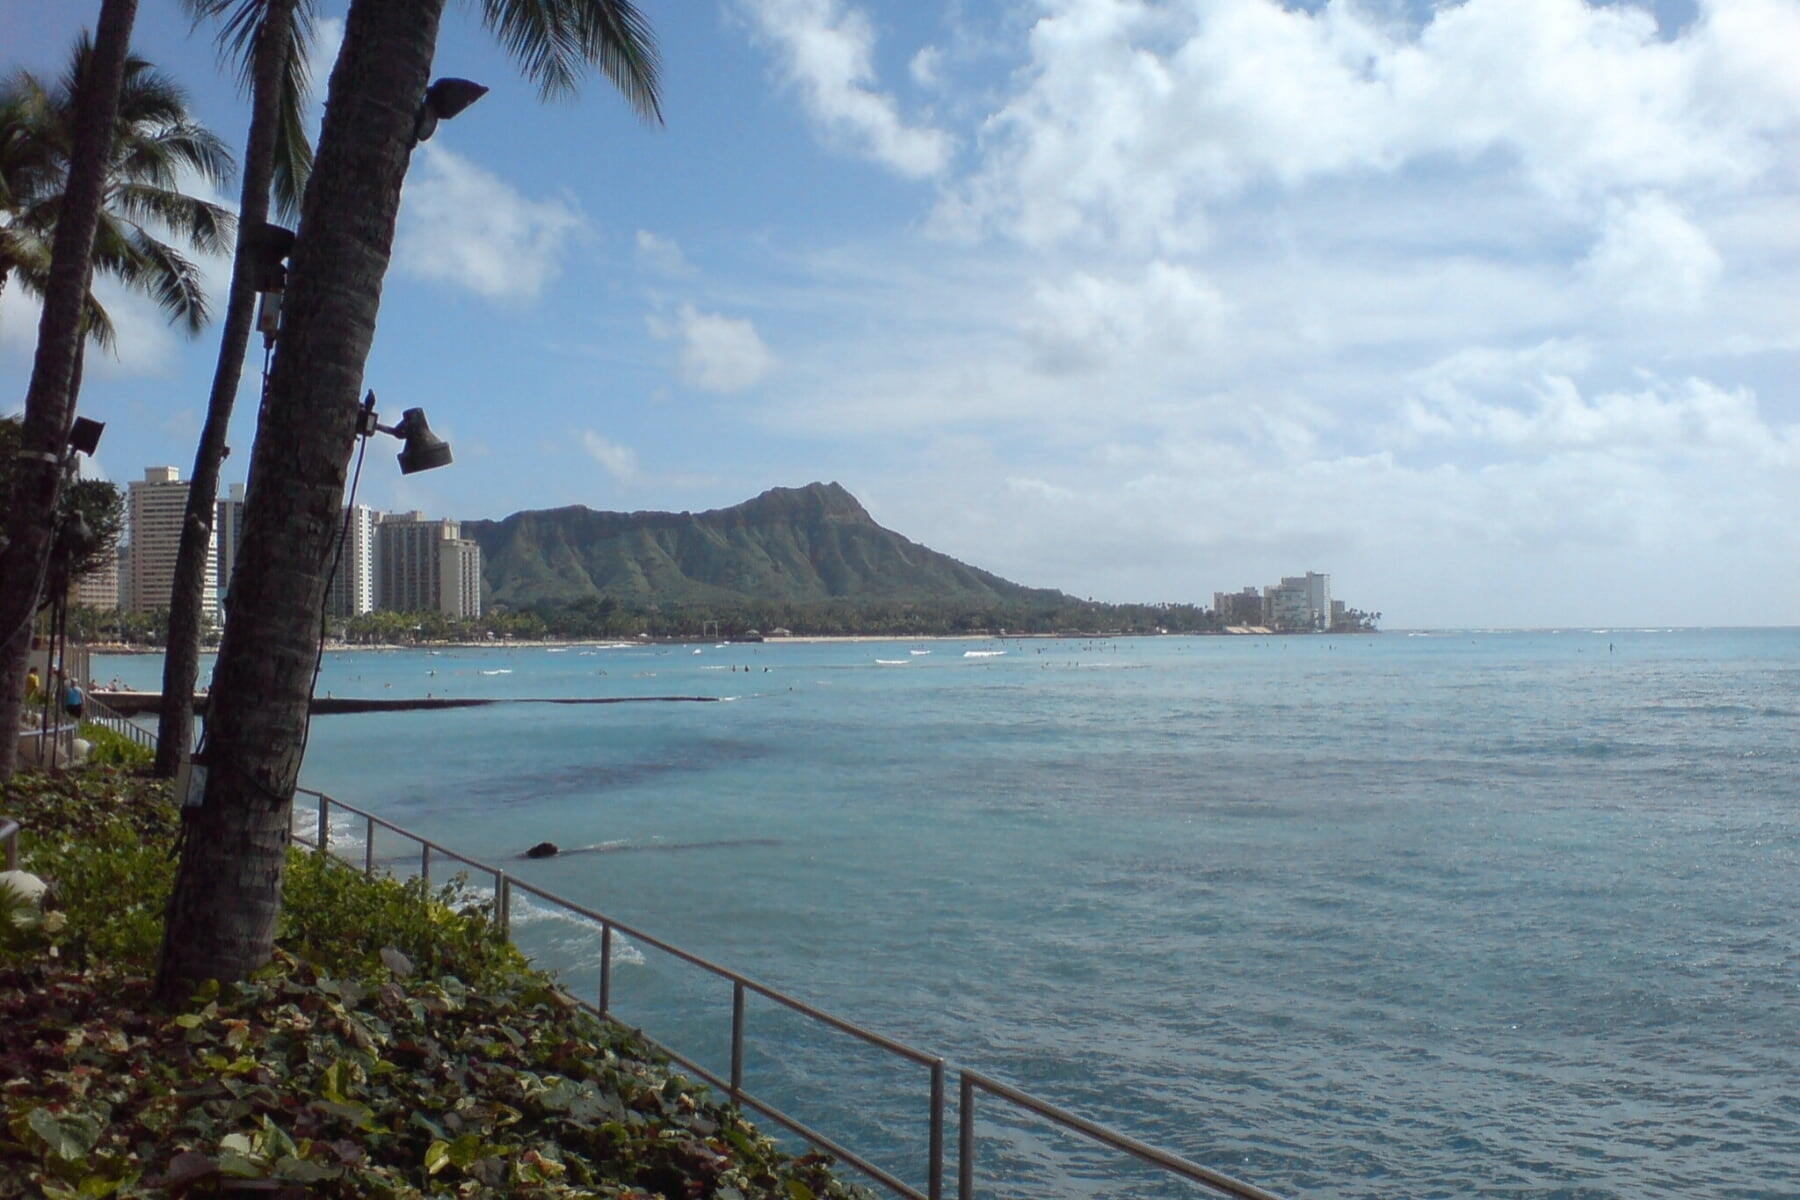 Honolulu - A shot of Diamond Head in Hawaii.